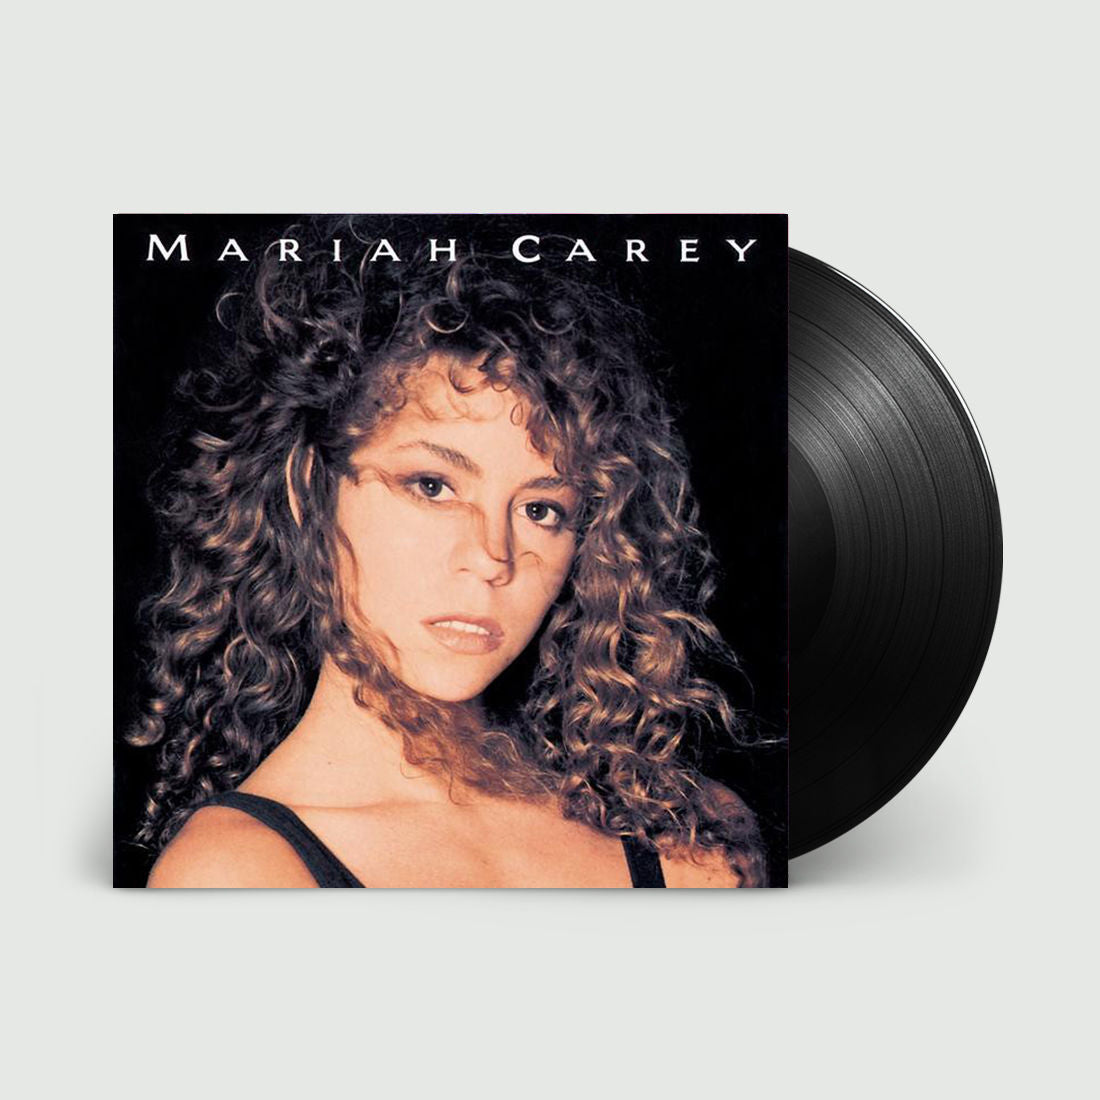 Mariah Carey - Mariah Carey: Vinyl LP - Sound of Vinyl